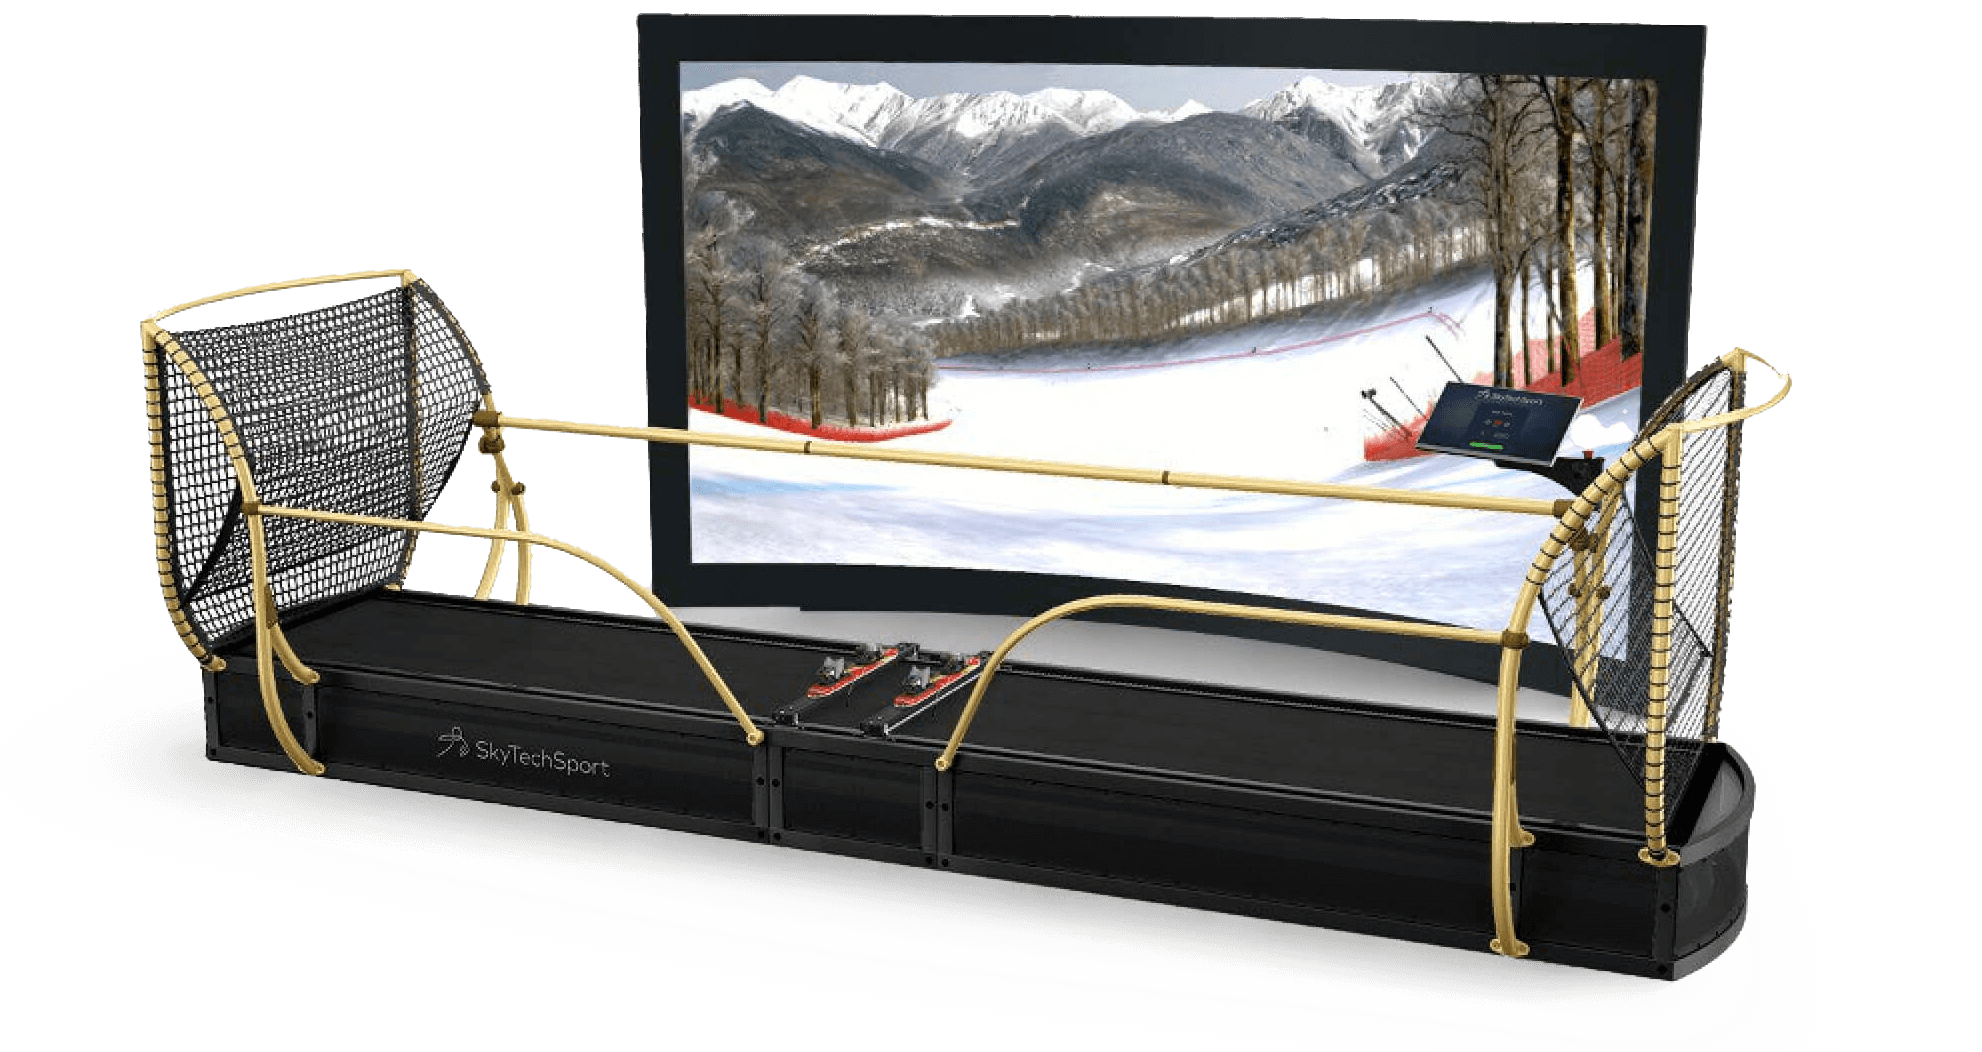 Interactive SkyTechSport Ski Simulator now available in Dubai